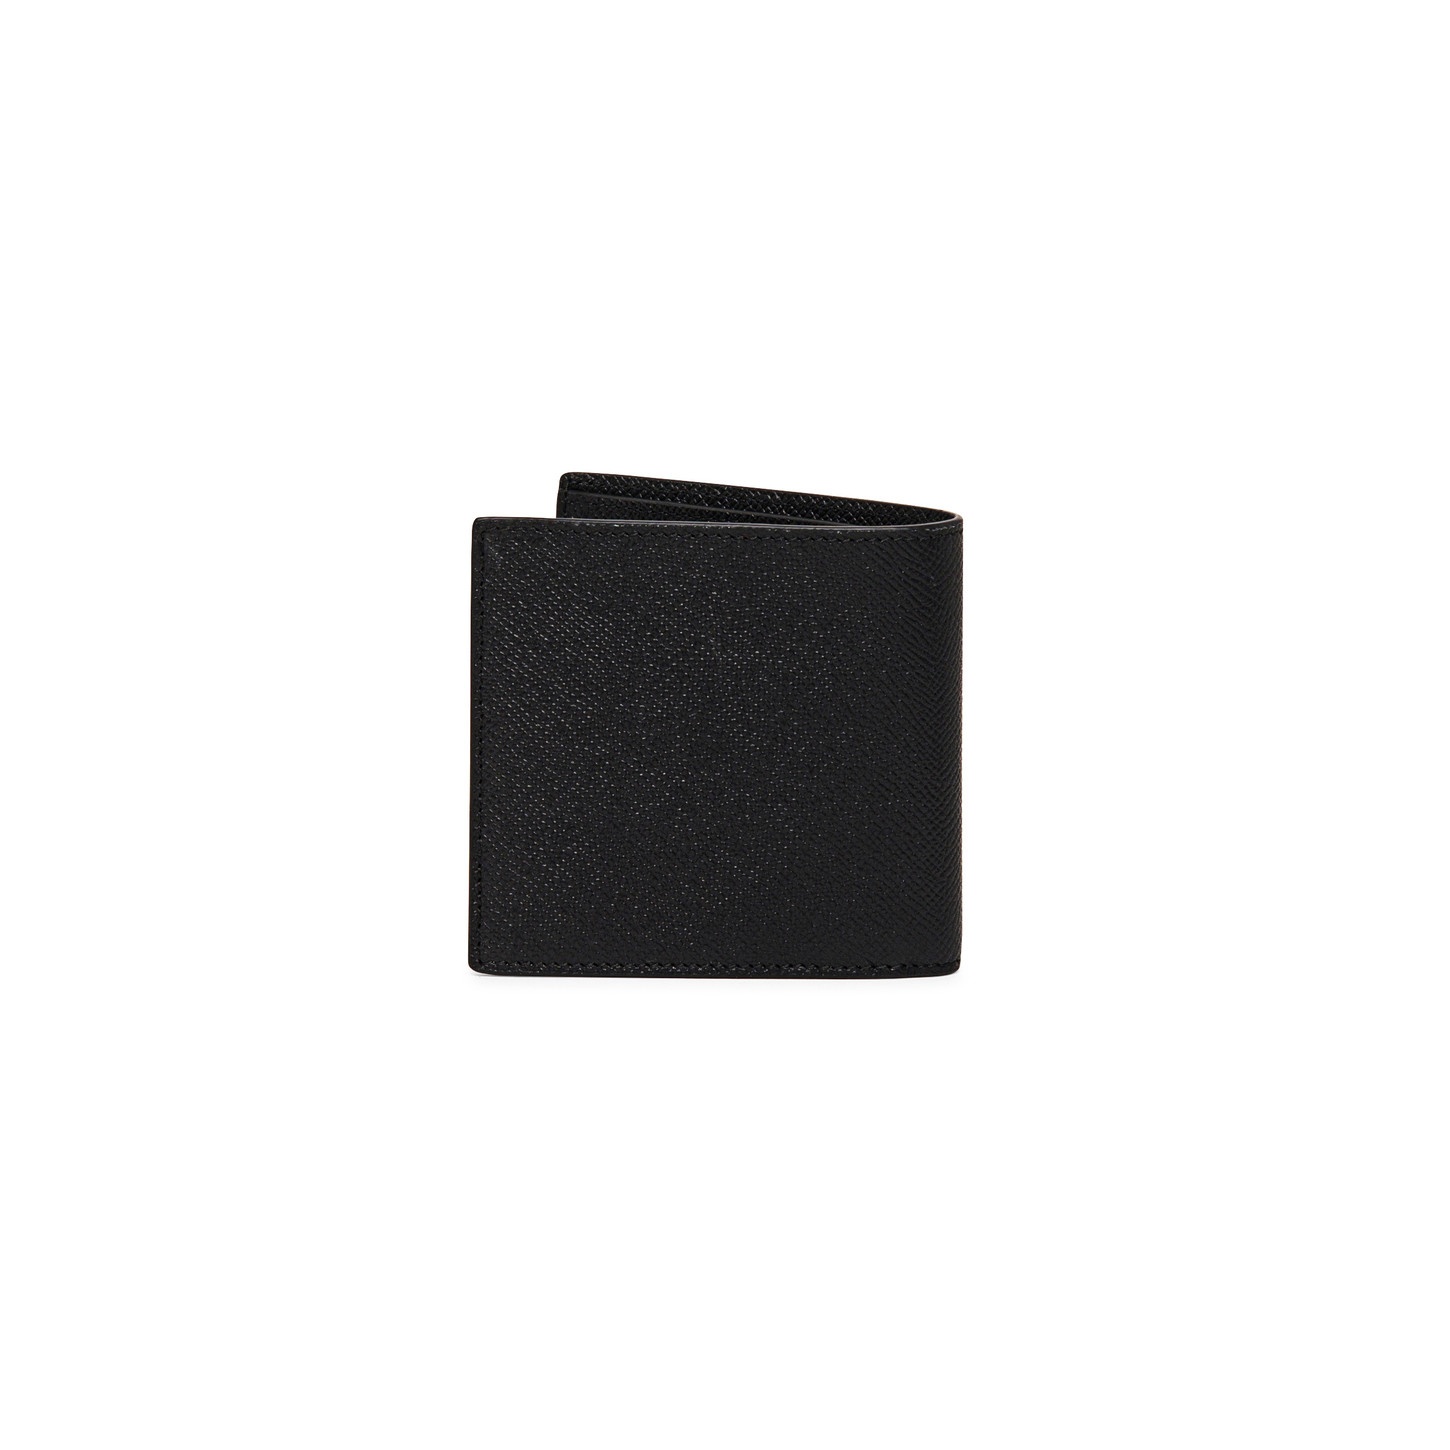 Black saffiano leather wallet - 2